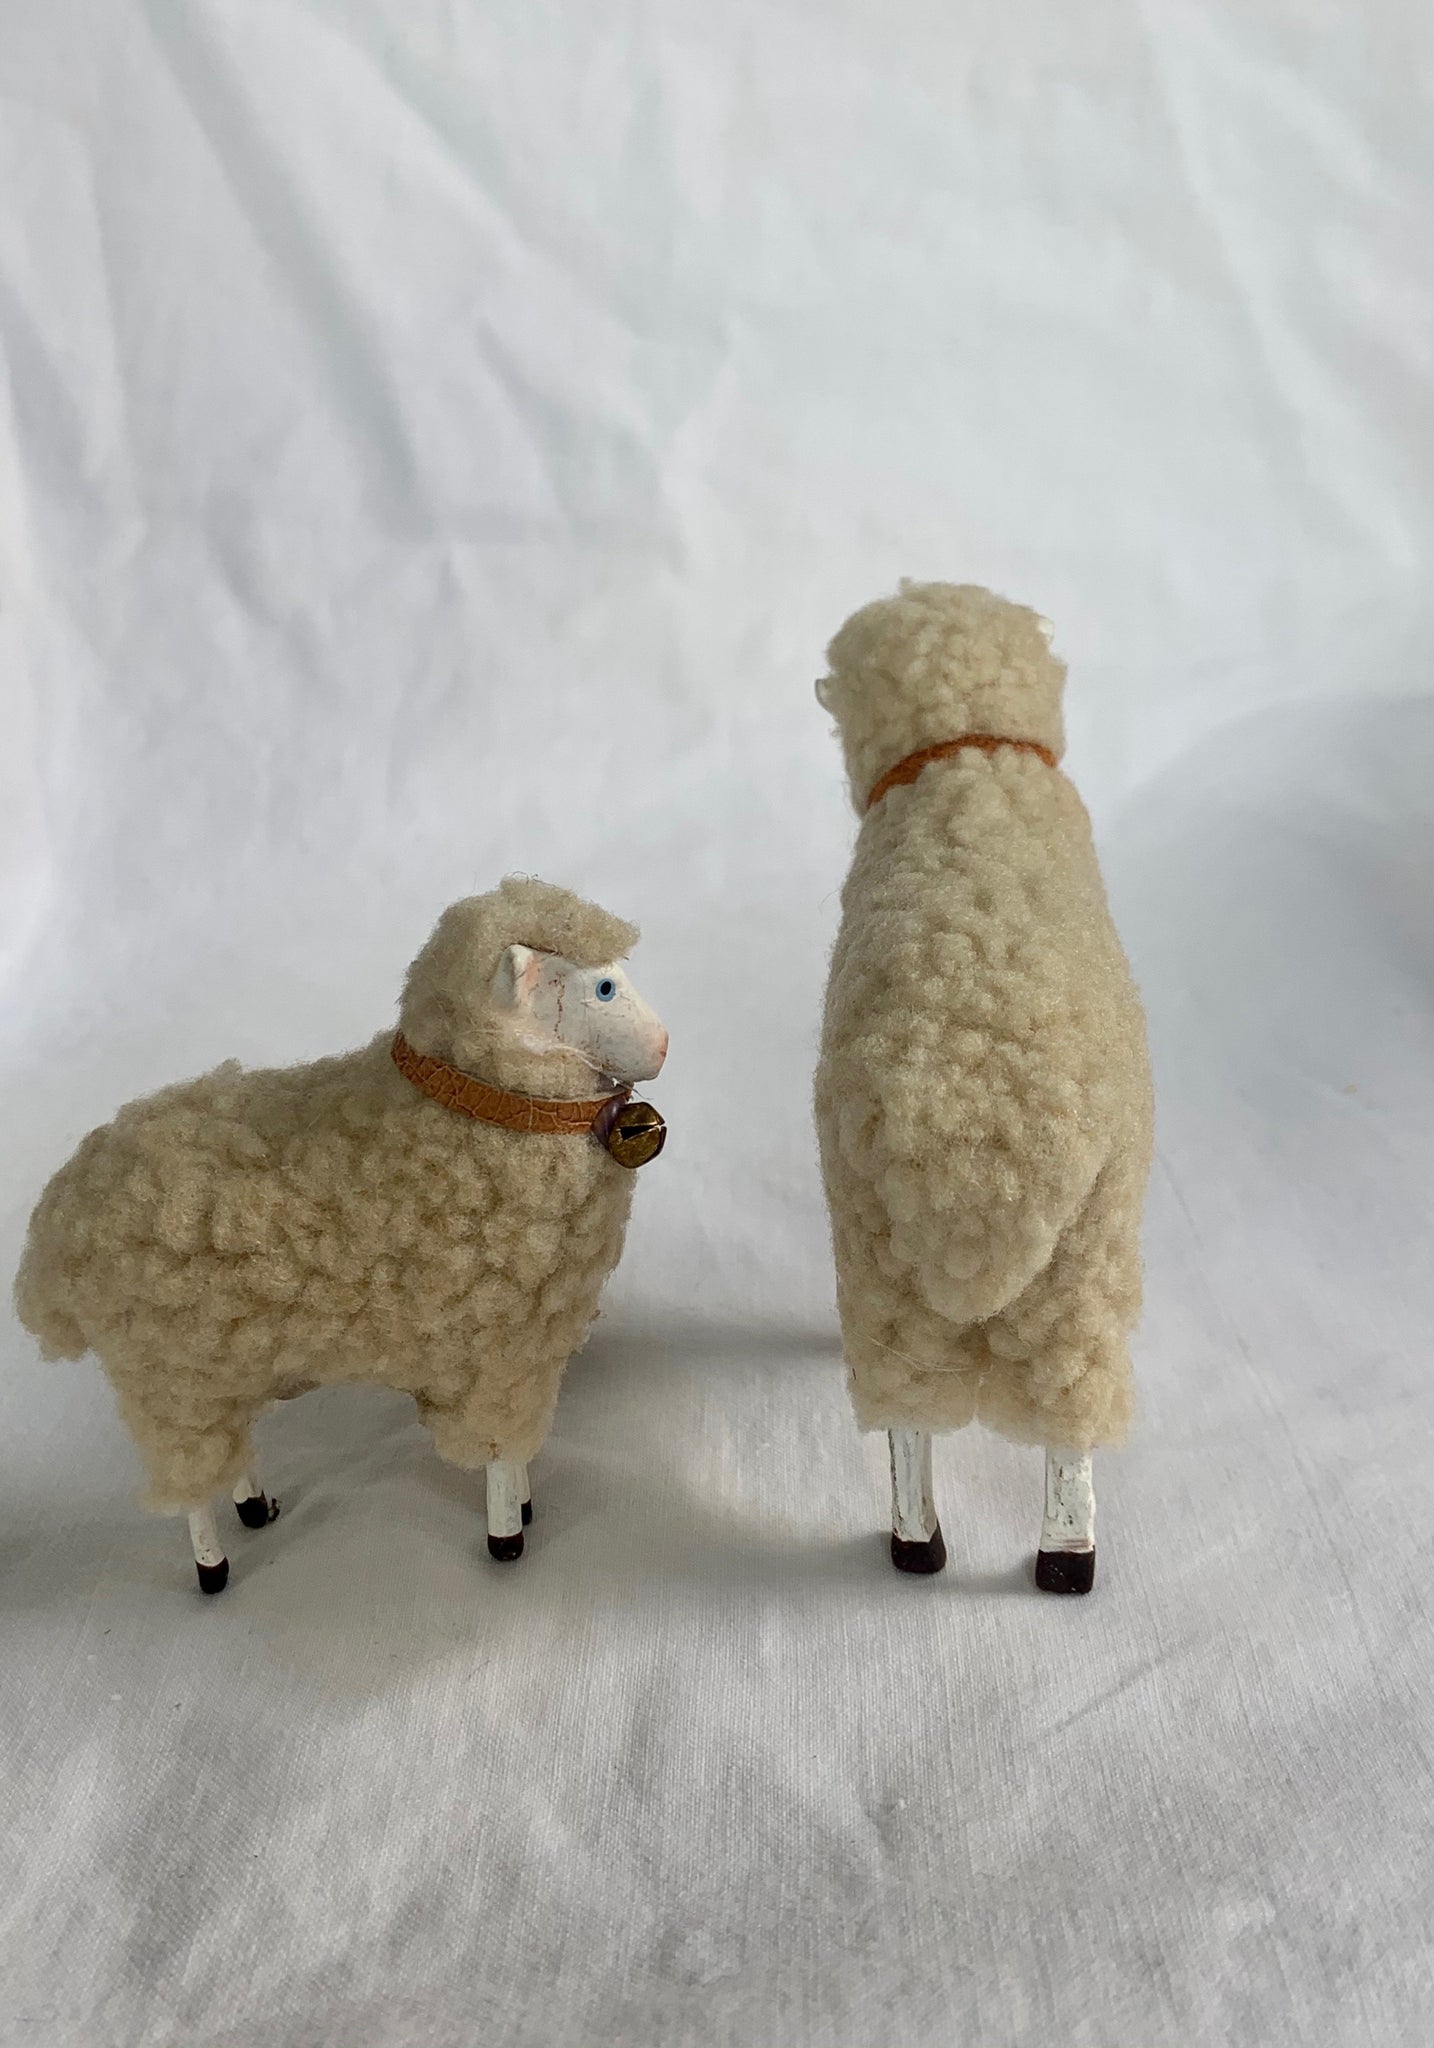 Pair of Fluffy Sheep